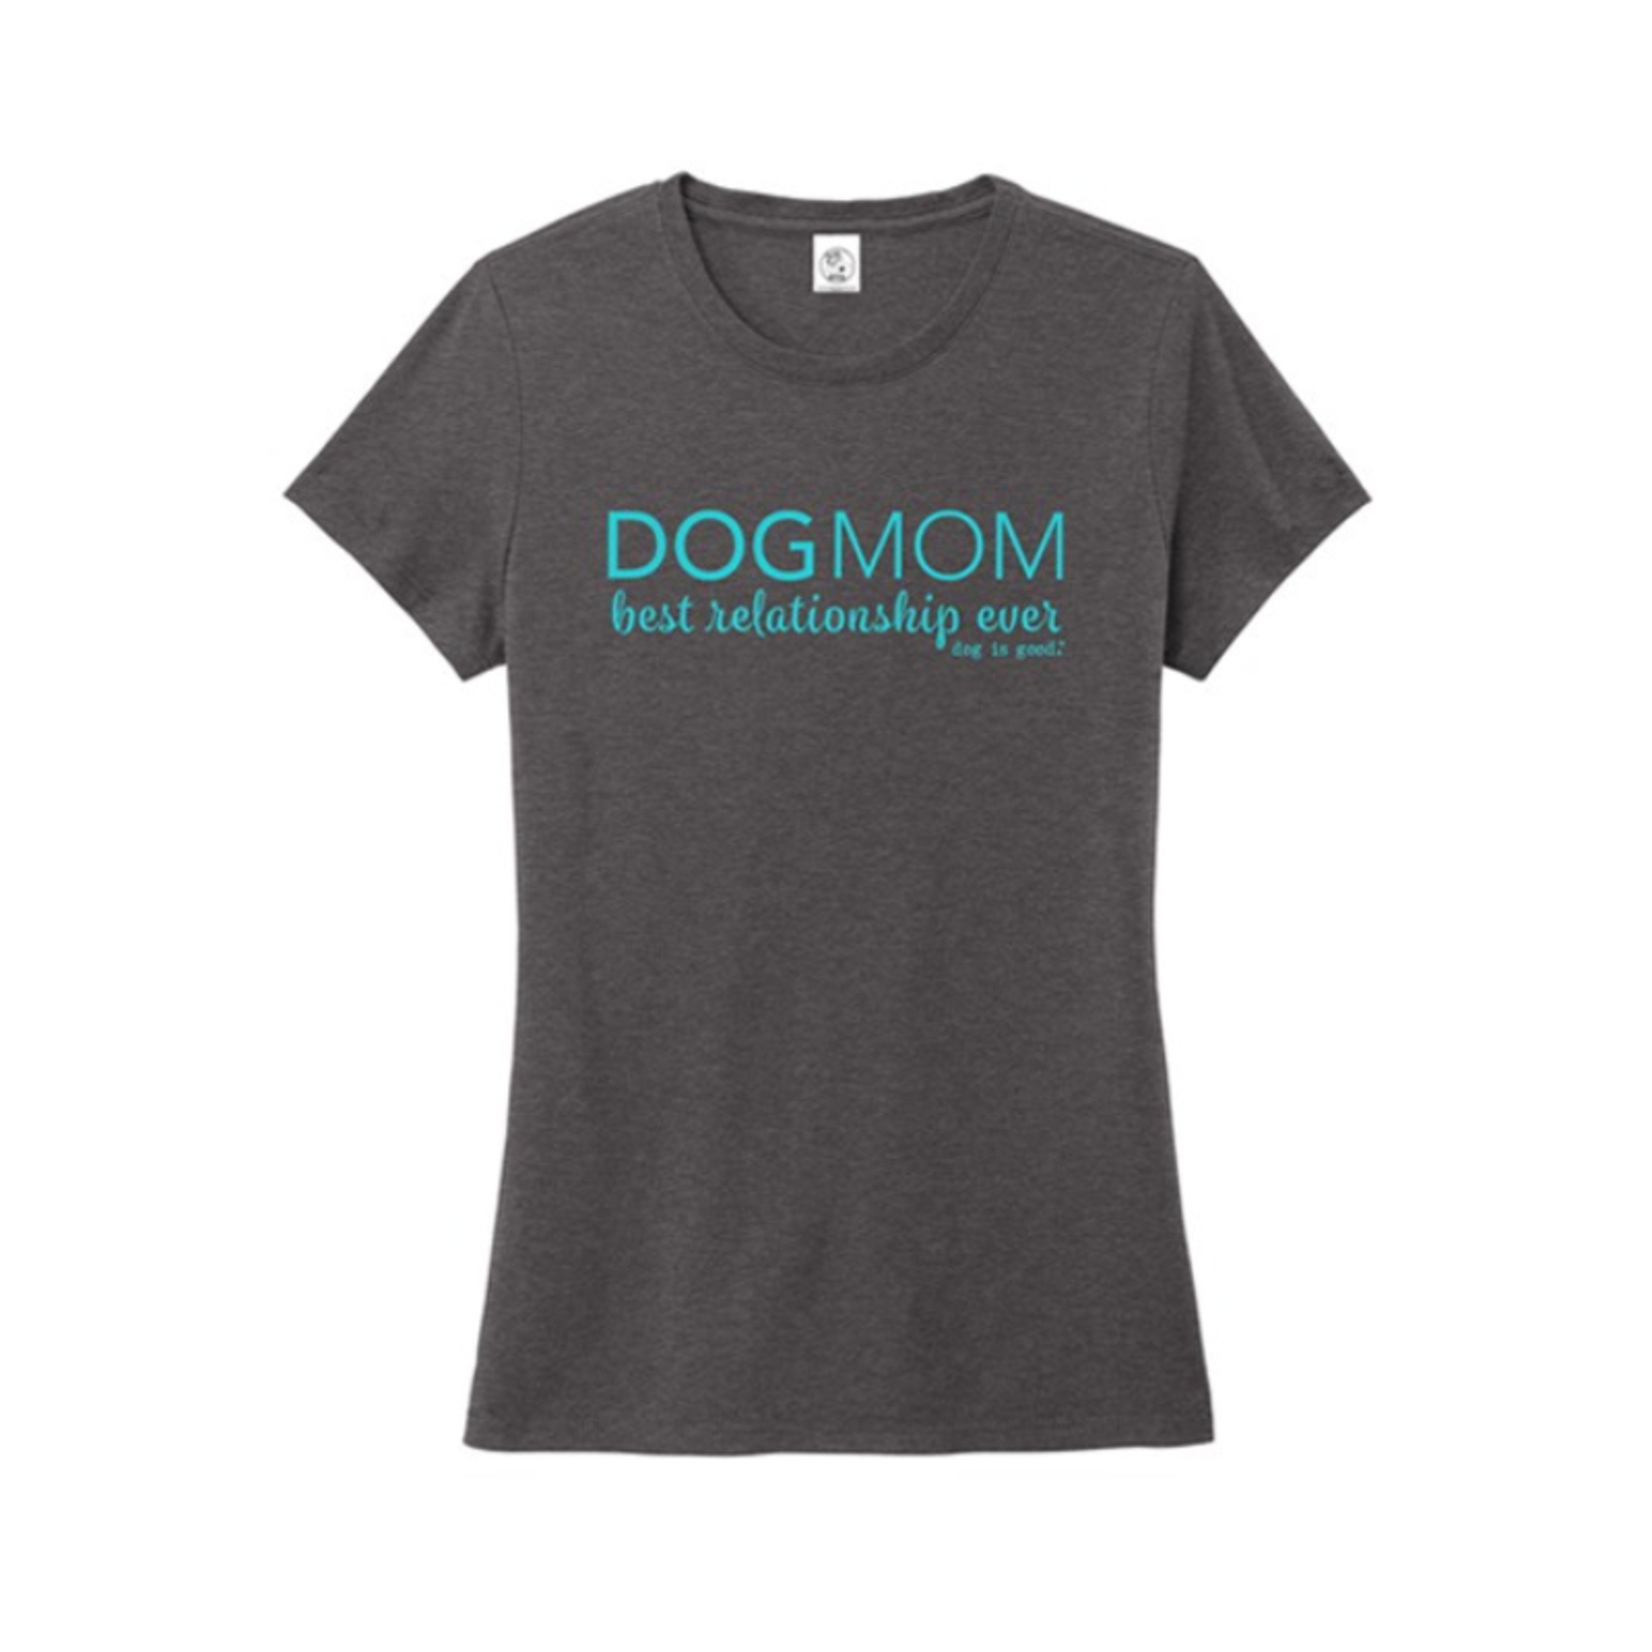 Dog Is Good Dog Mom - Ladies Crew Neck T-Shirt - Dog is Good